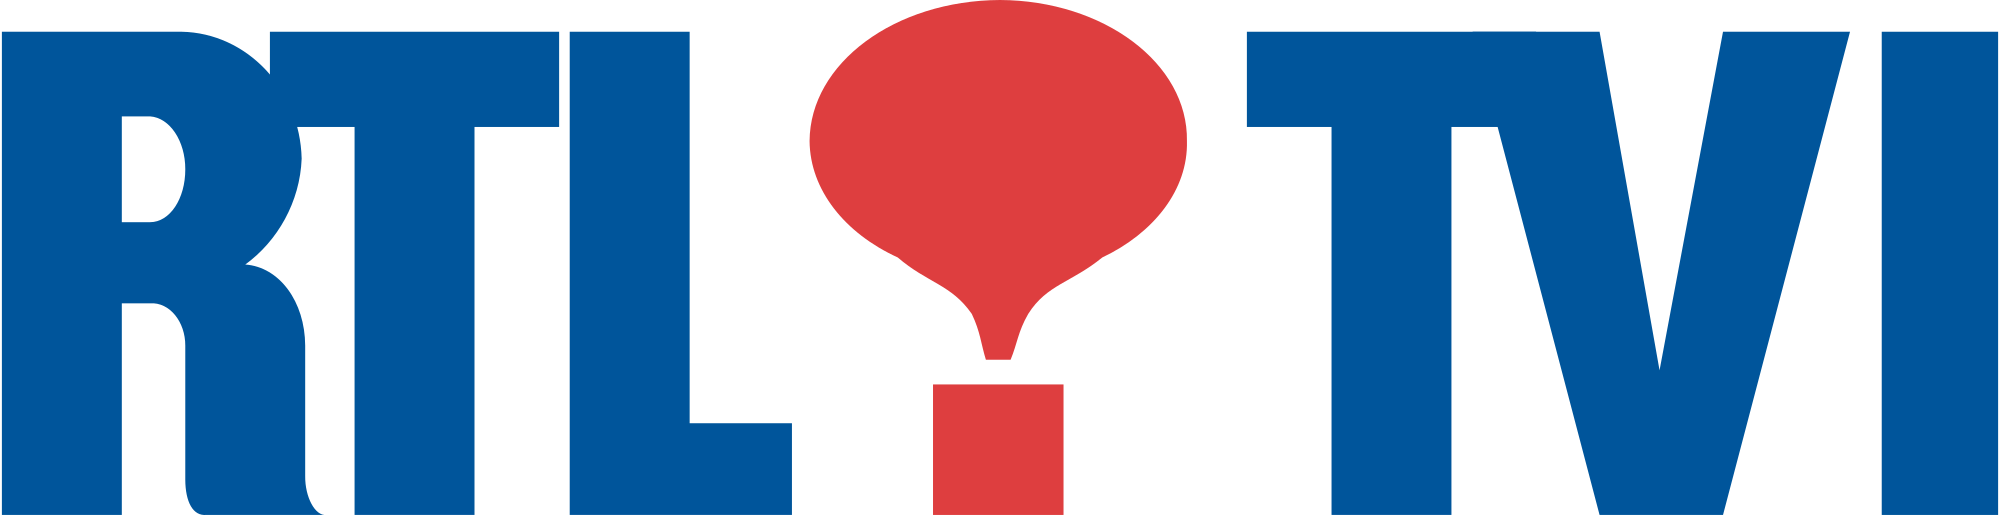 Logo de la société RTL-TVi 4543